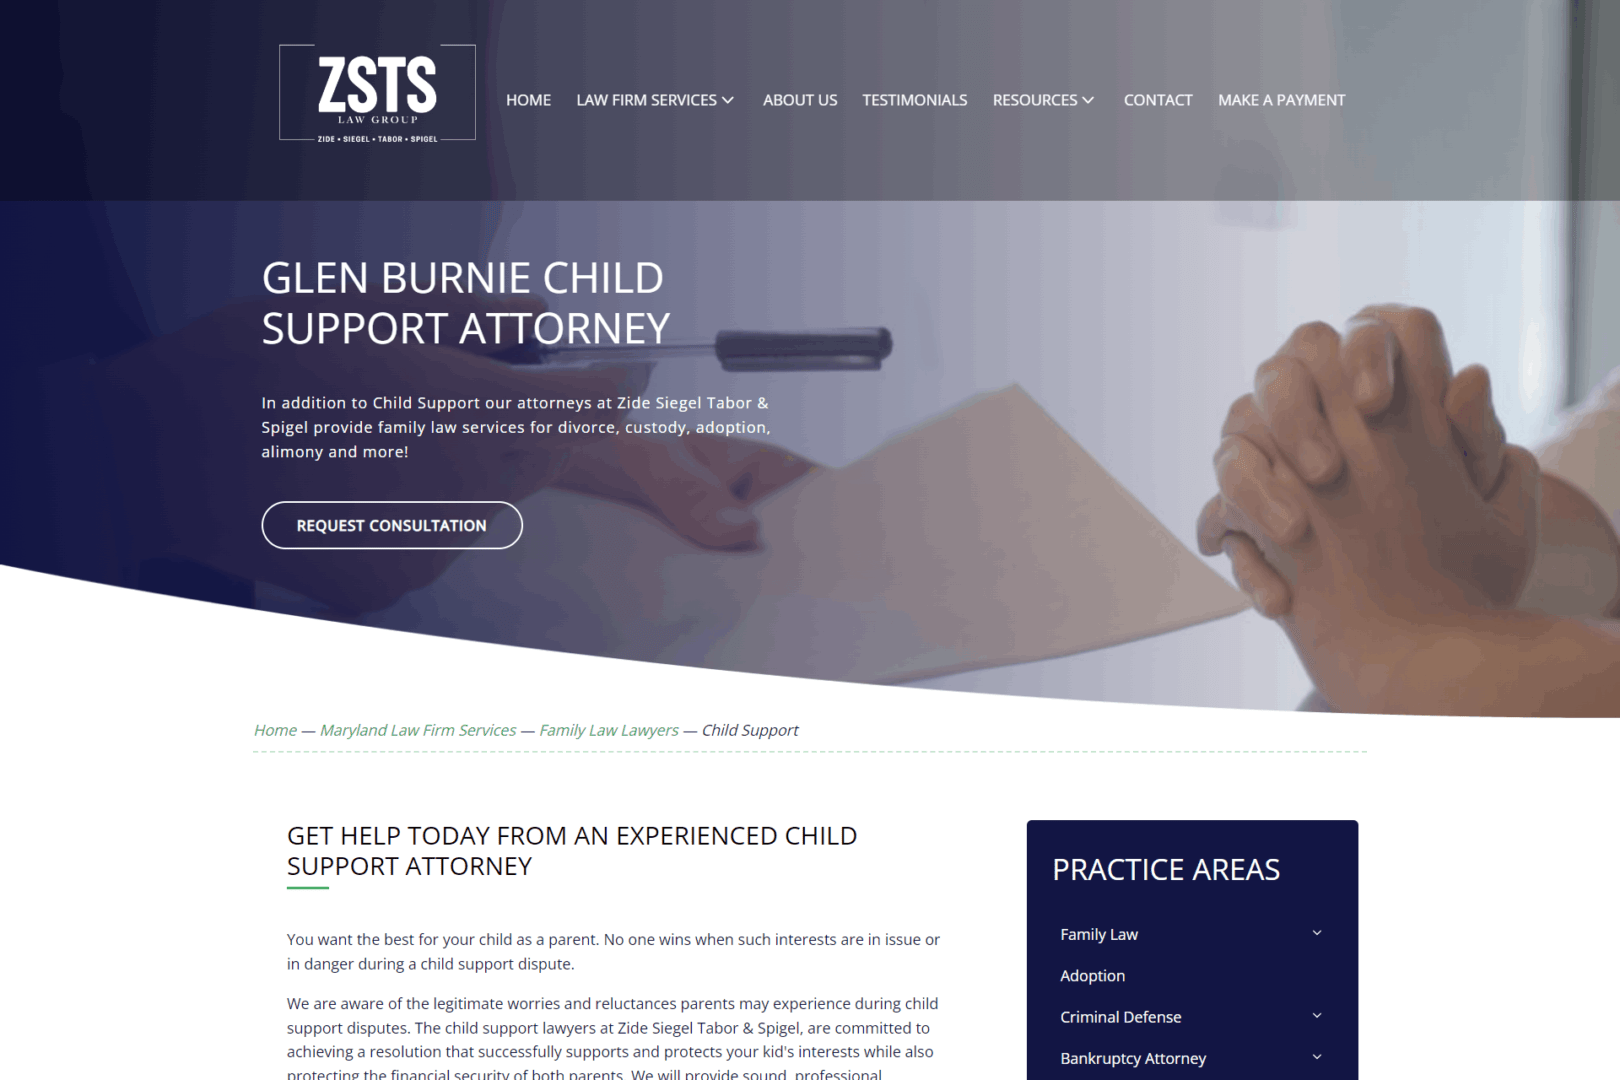 Glen Burnie Child Support Attorney Web Design For Family Lawer